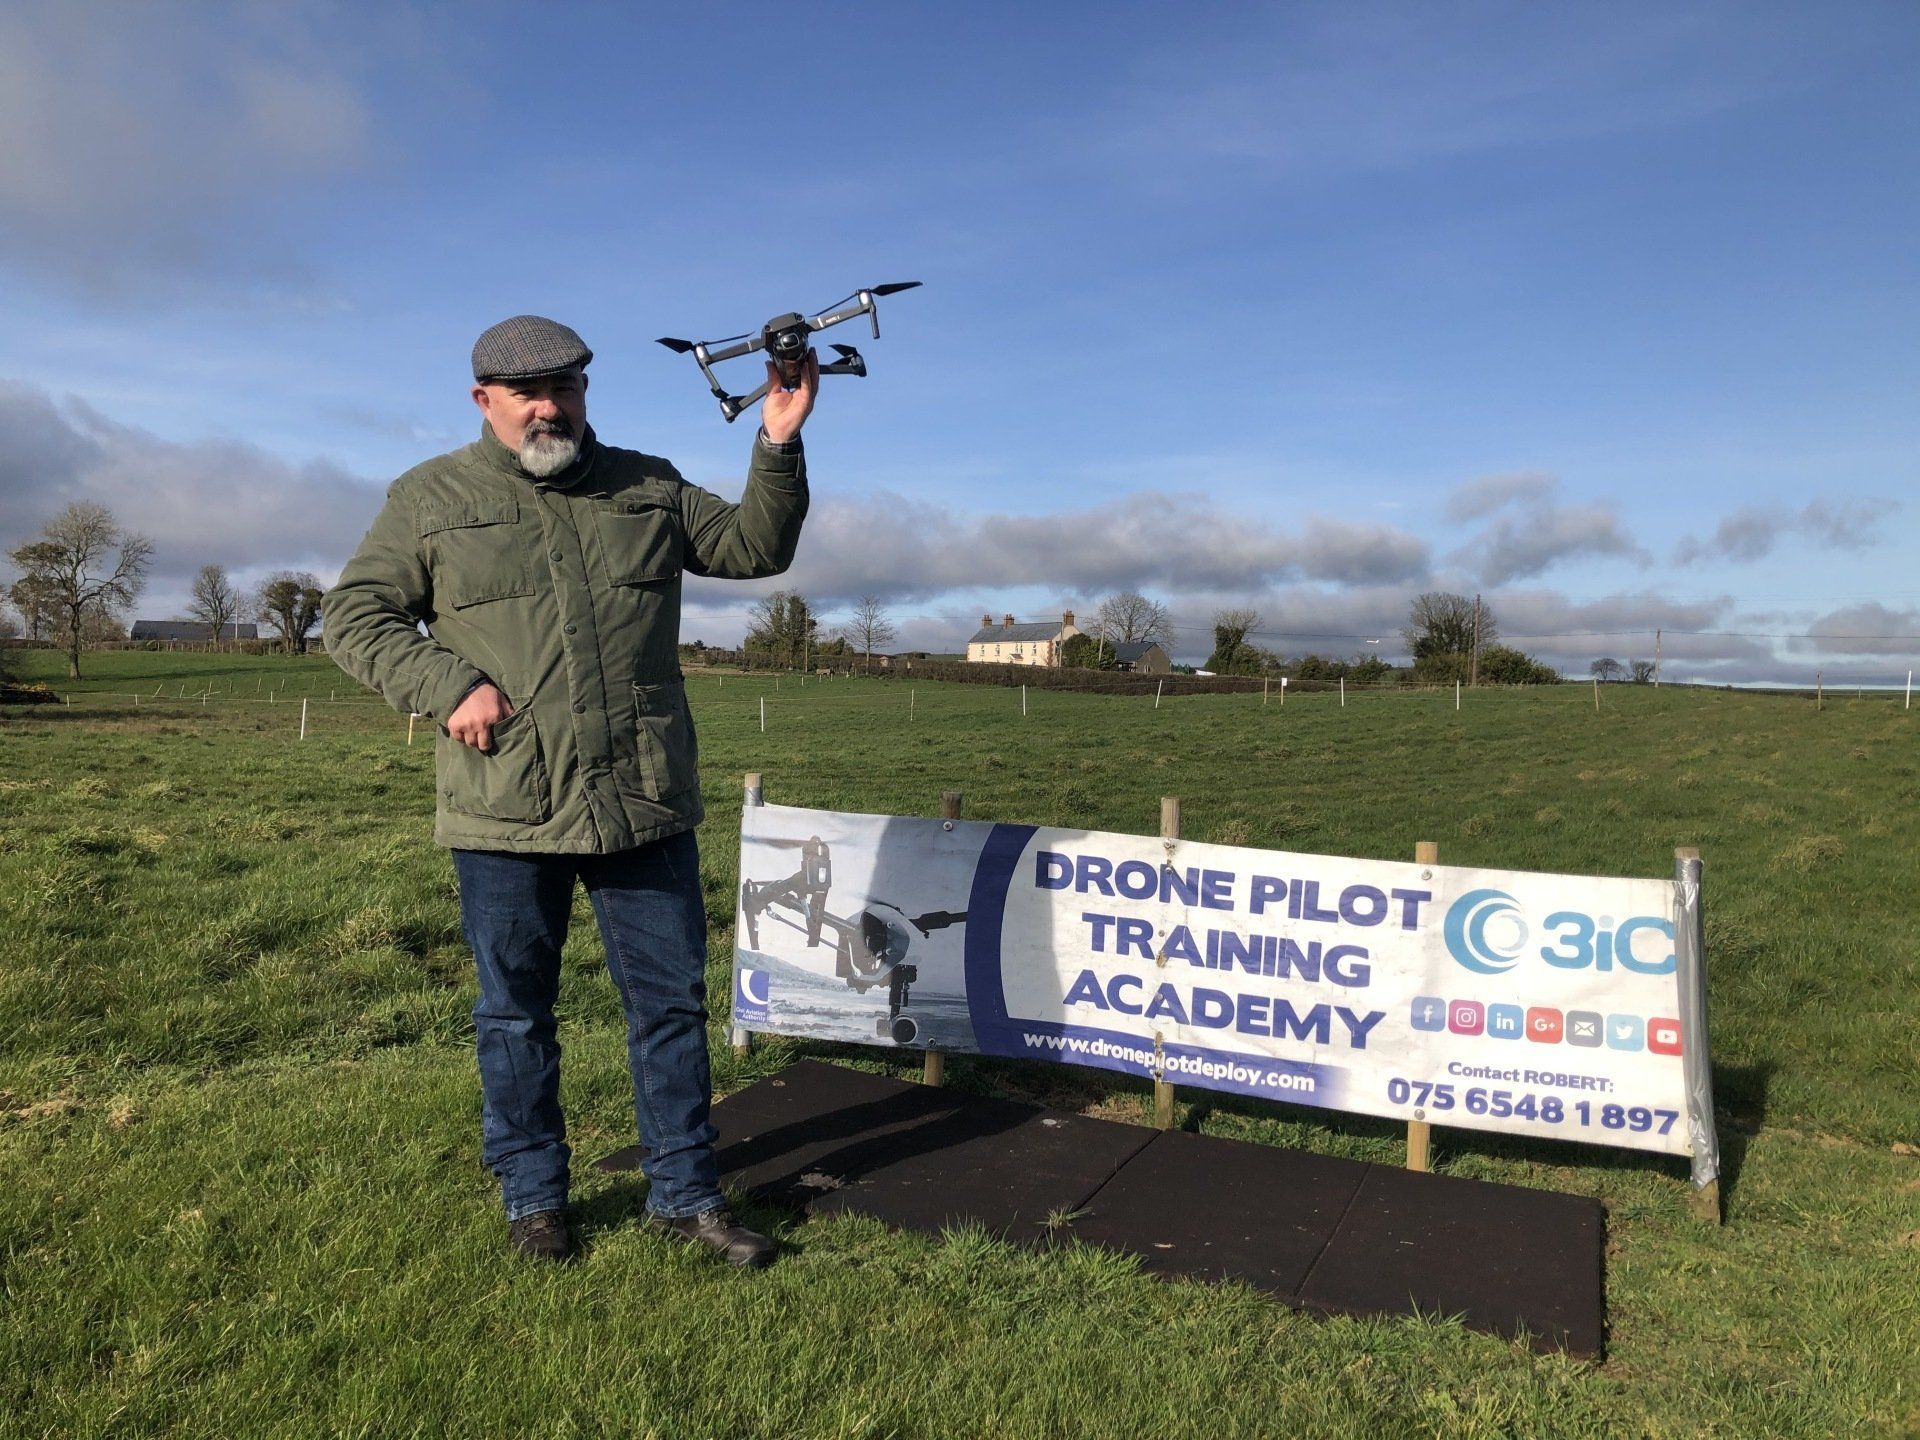 Drone Pilot Training Academy - Belfast Media Company